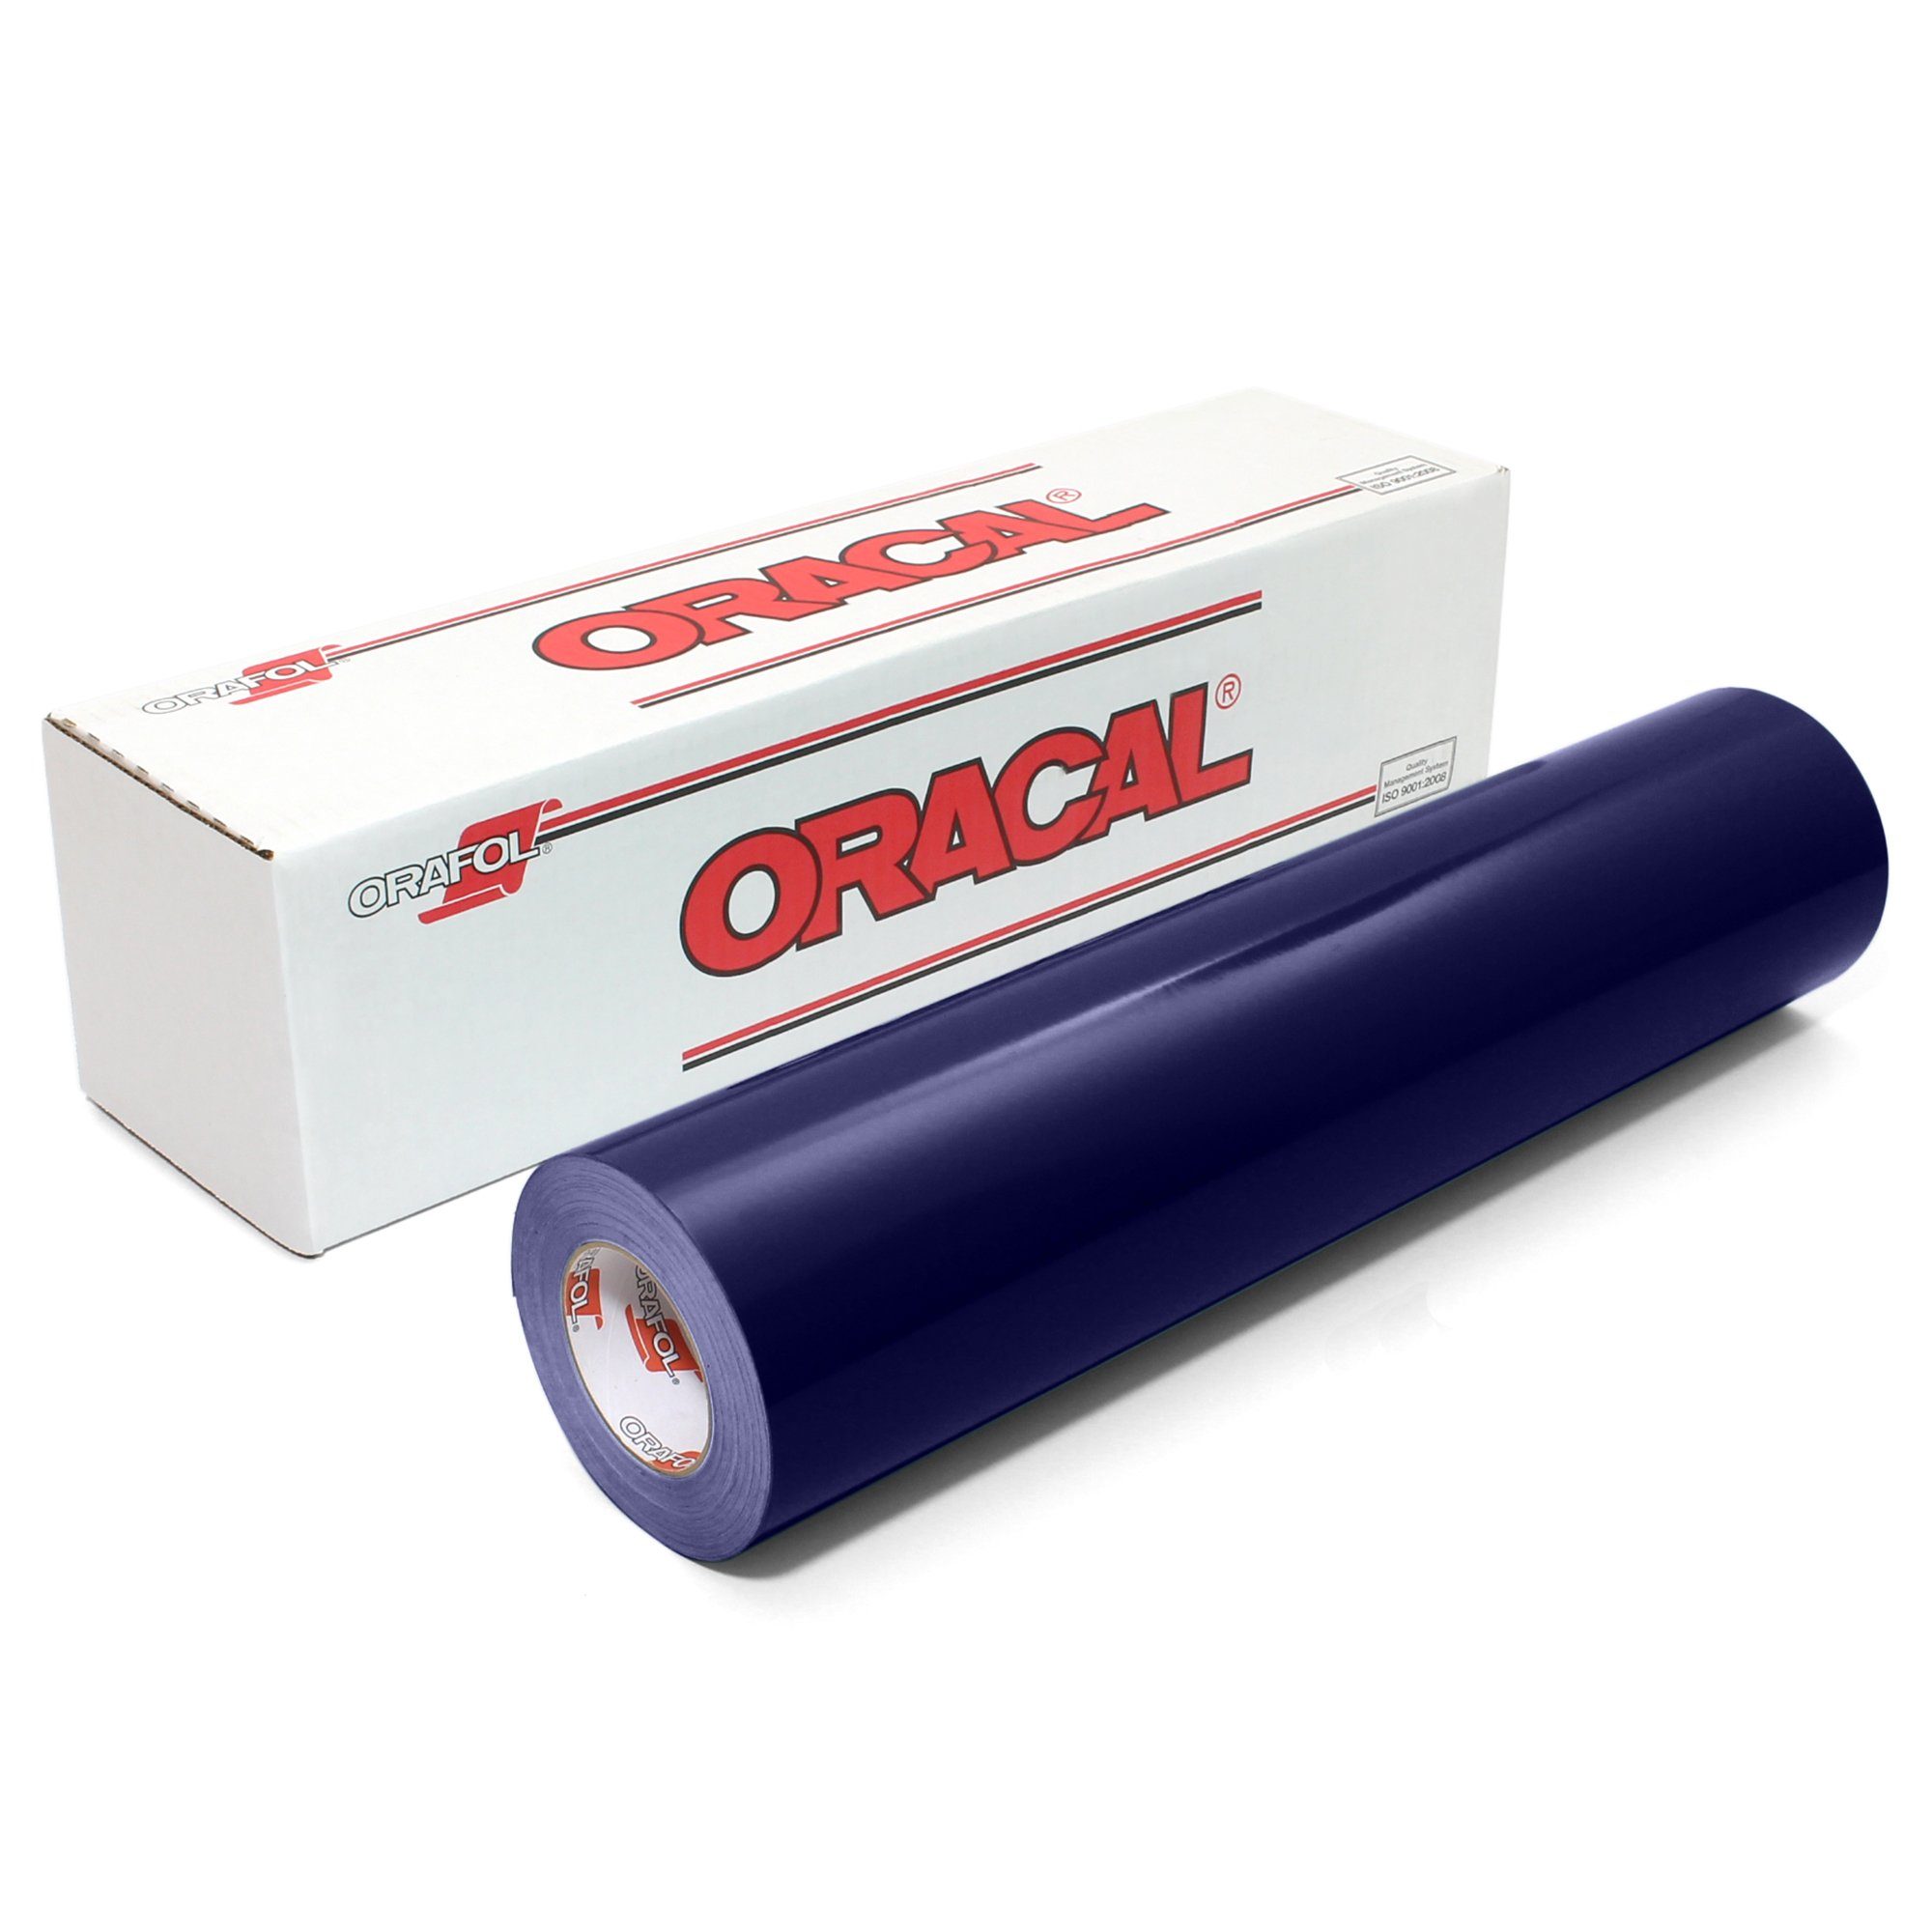 Oracal 651 Glossy Vinyl Rolls - Steel Blue, 12 inch x 6 Foot